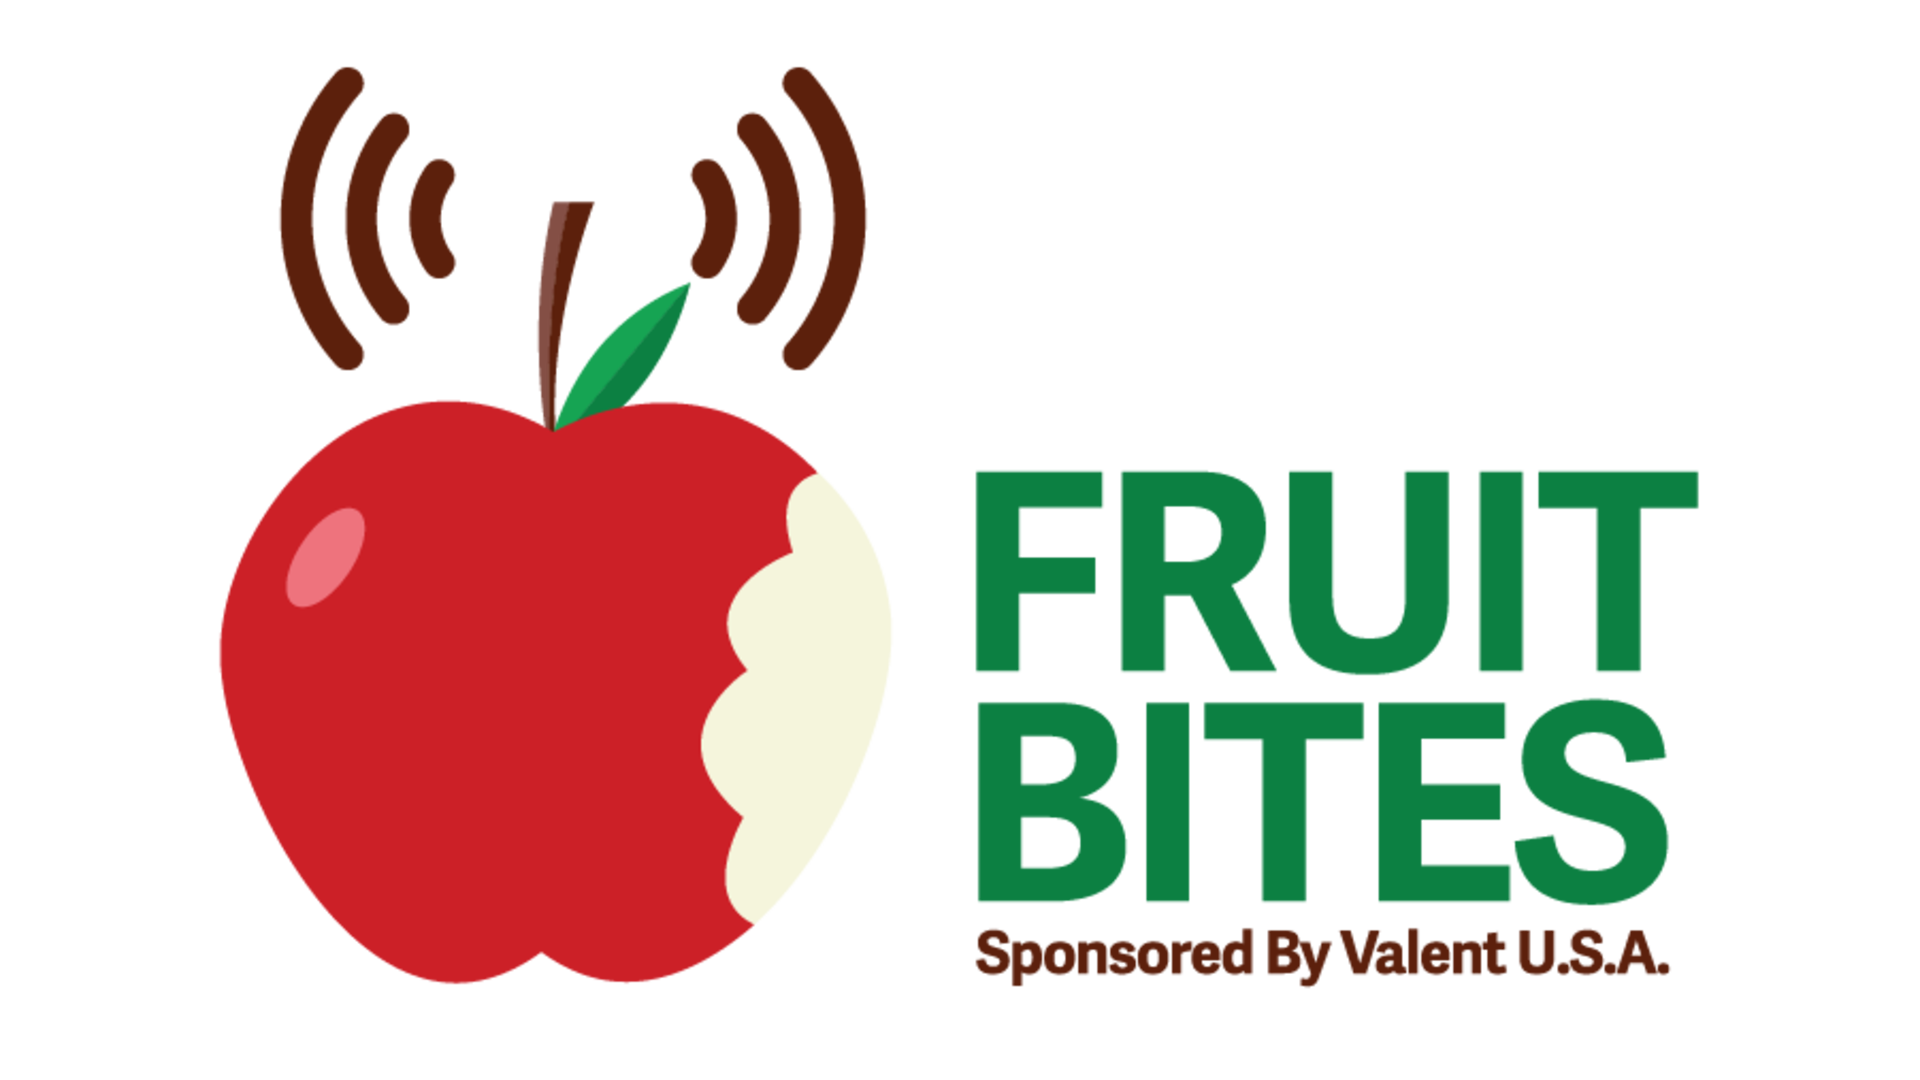 Fruit Bites for August 9-11 ... Safety